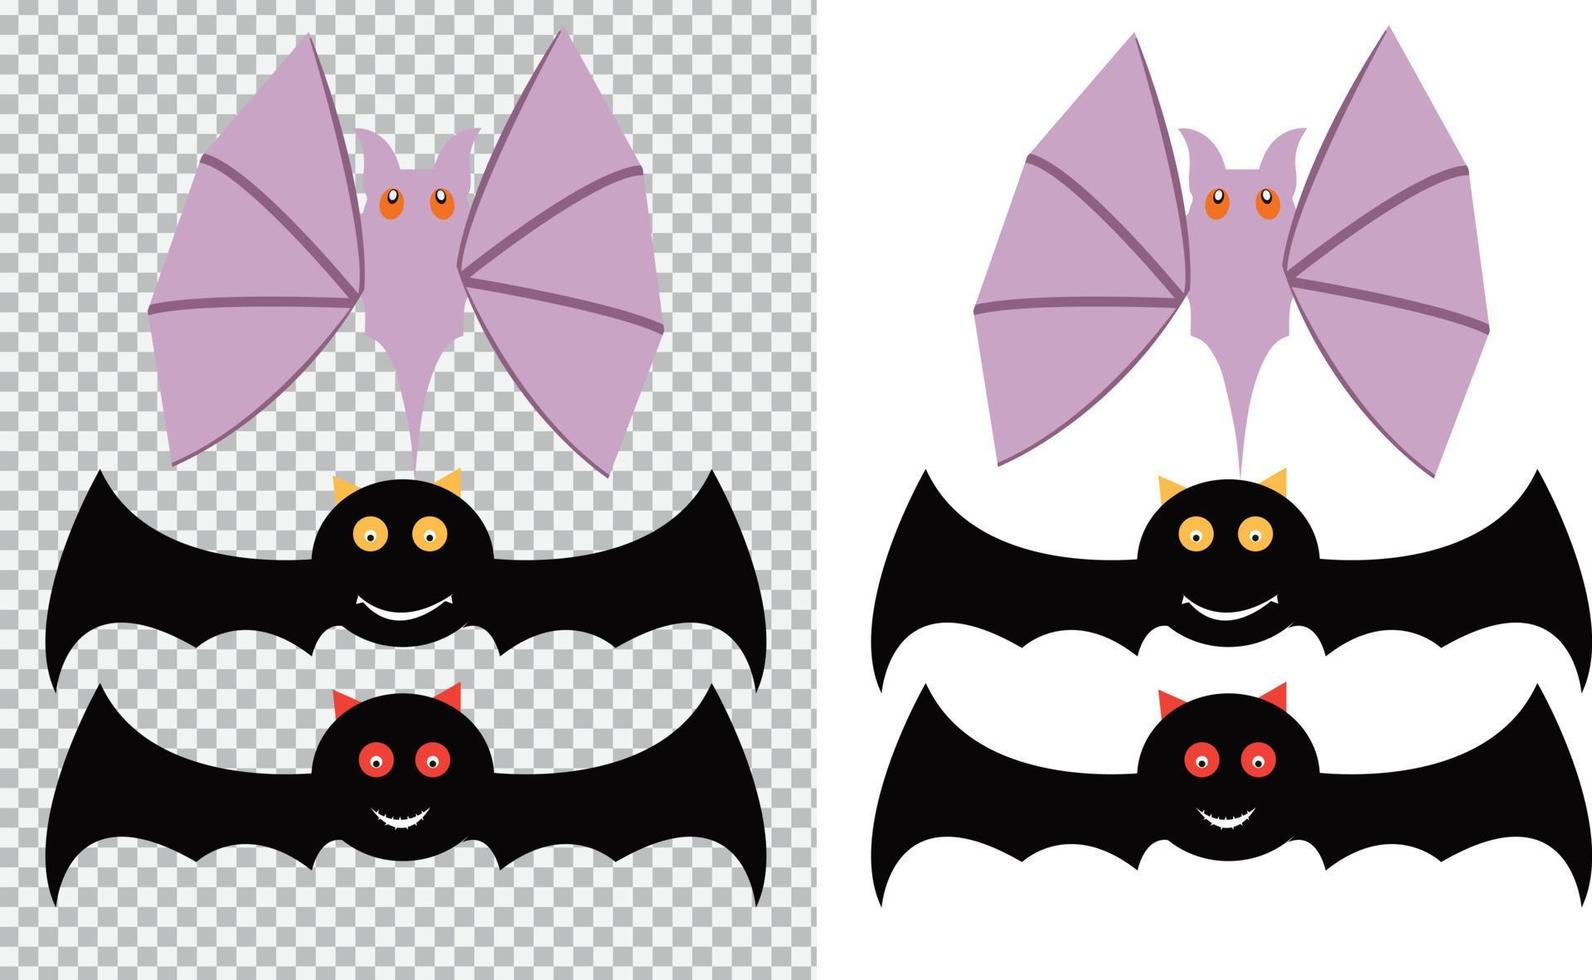 ilustración de diseño de vector de vampiro de silueta de dibujos animados de murciélago negro de halloween